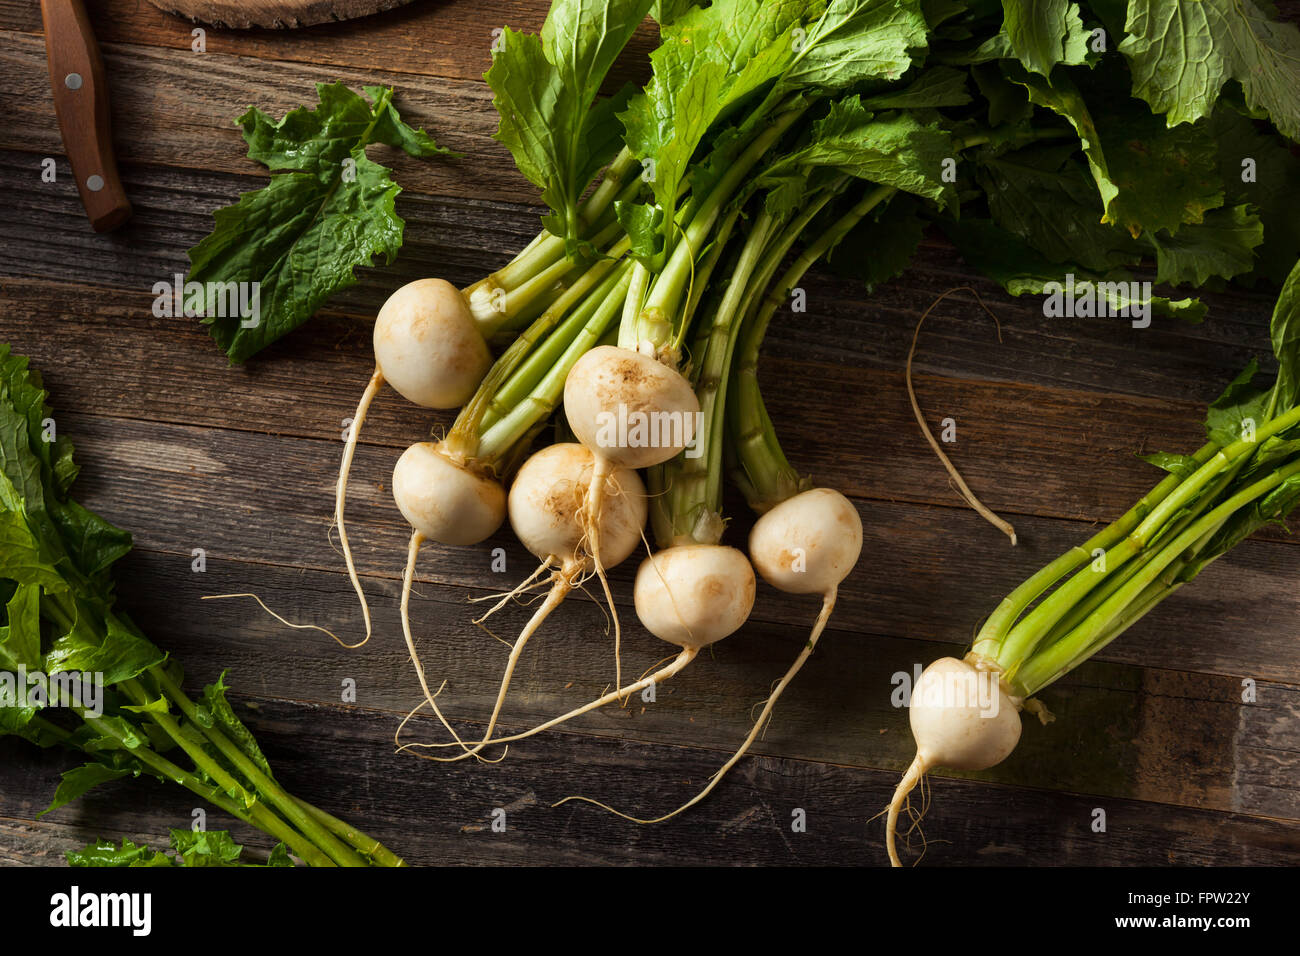 Raw Organic White Radishes with Green Stems Stock Photo